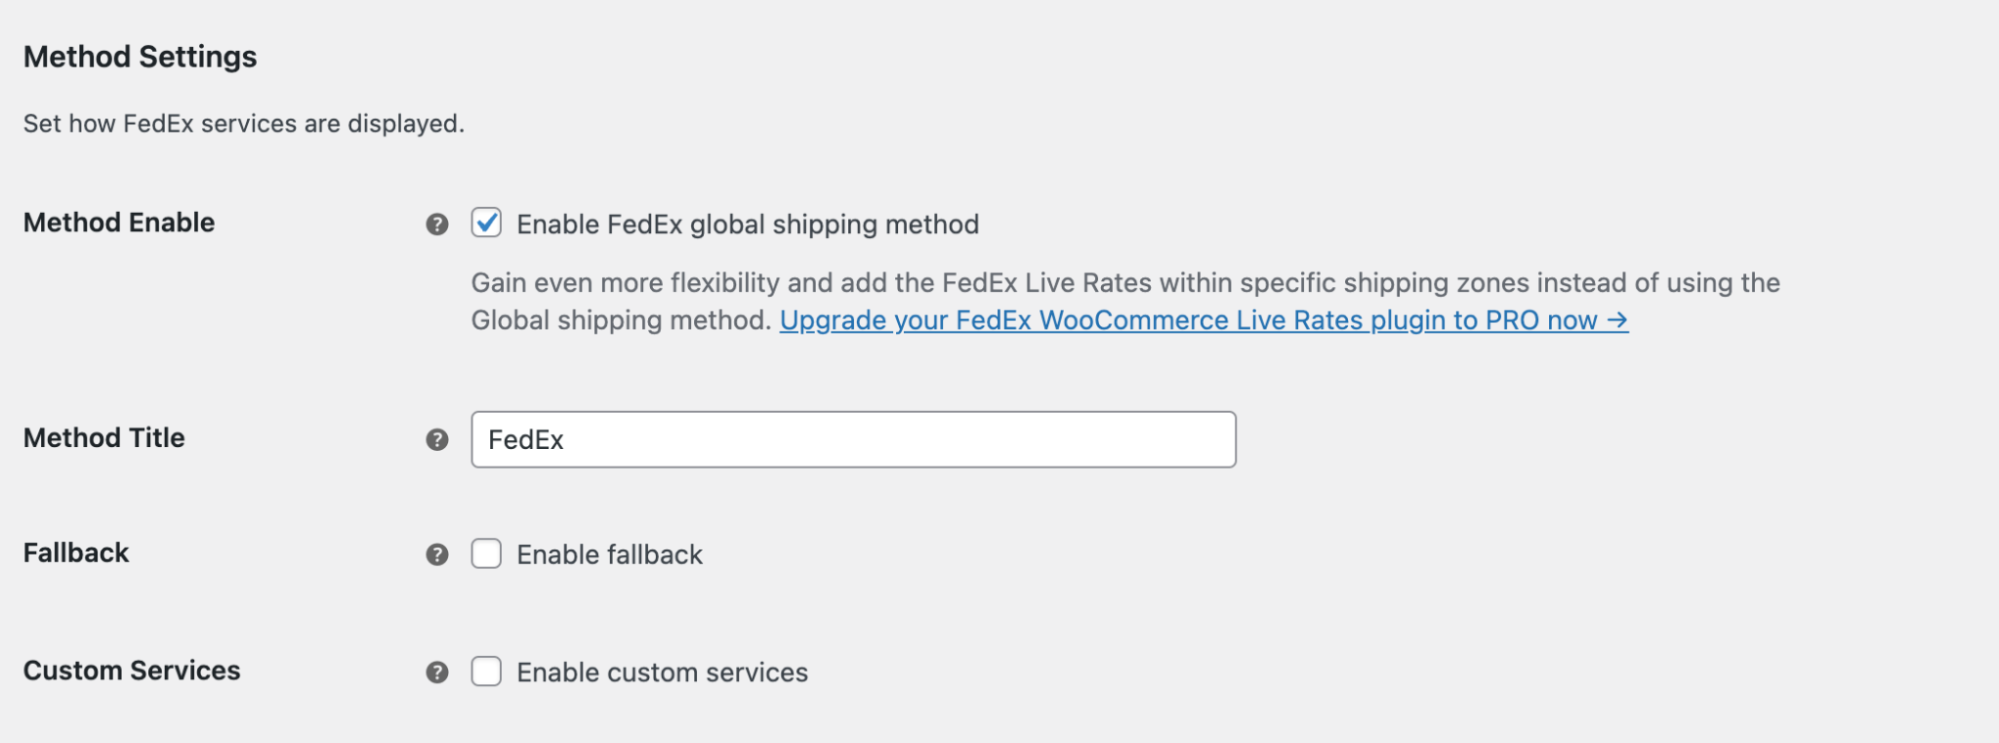 Enable FedEx global shipping method checkbox